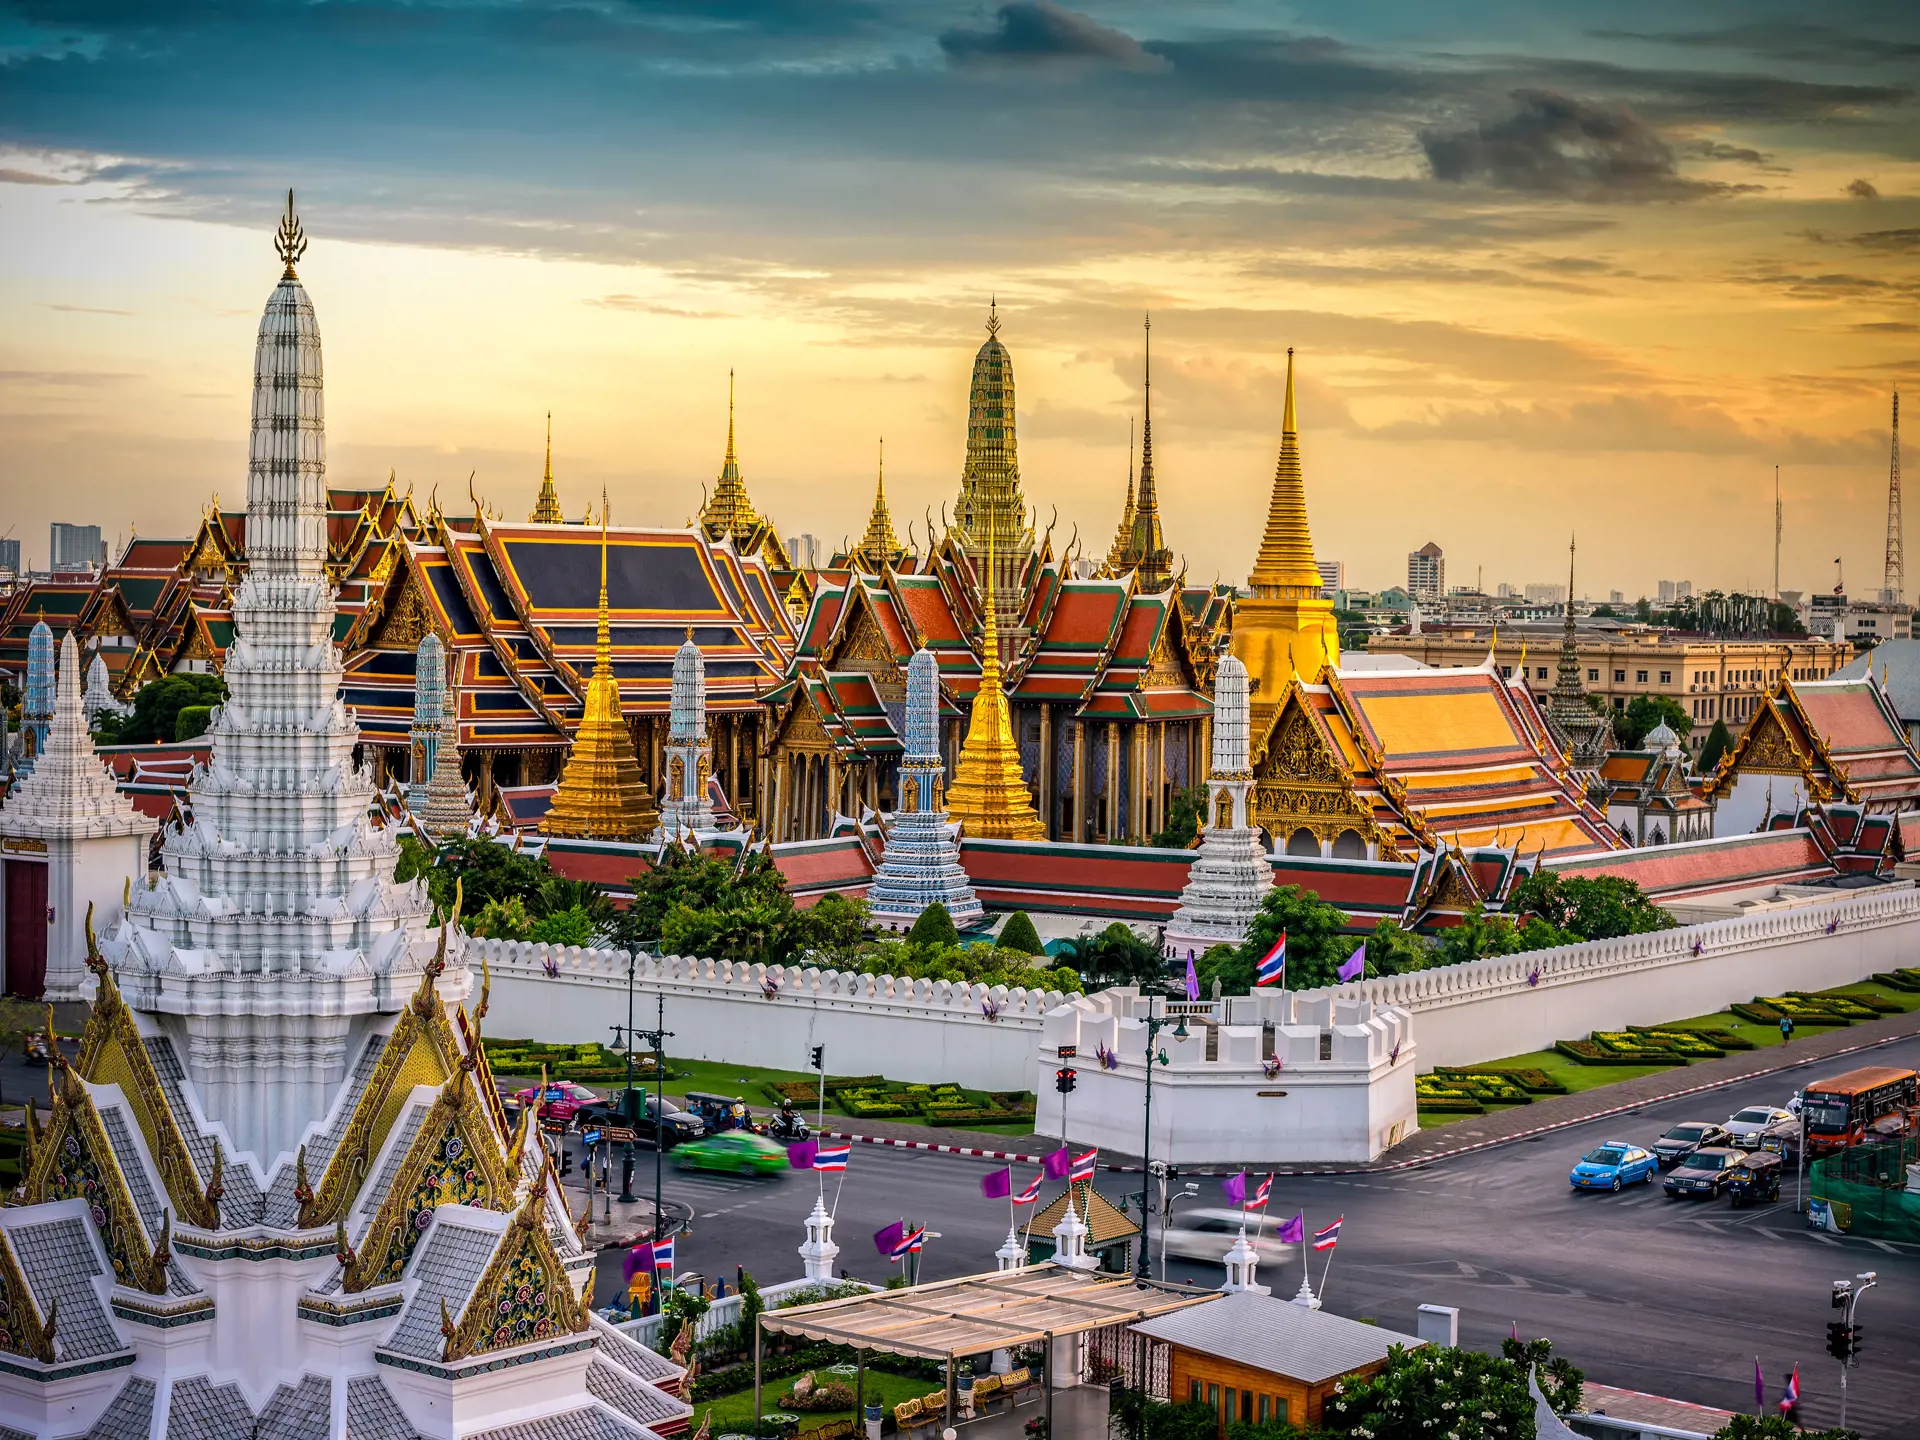 shutterstock_299388287 Grand palace and Wat phra keaw at sunset bangkok, Thailand.jpg